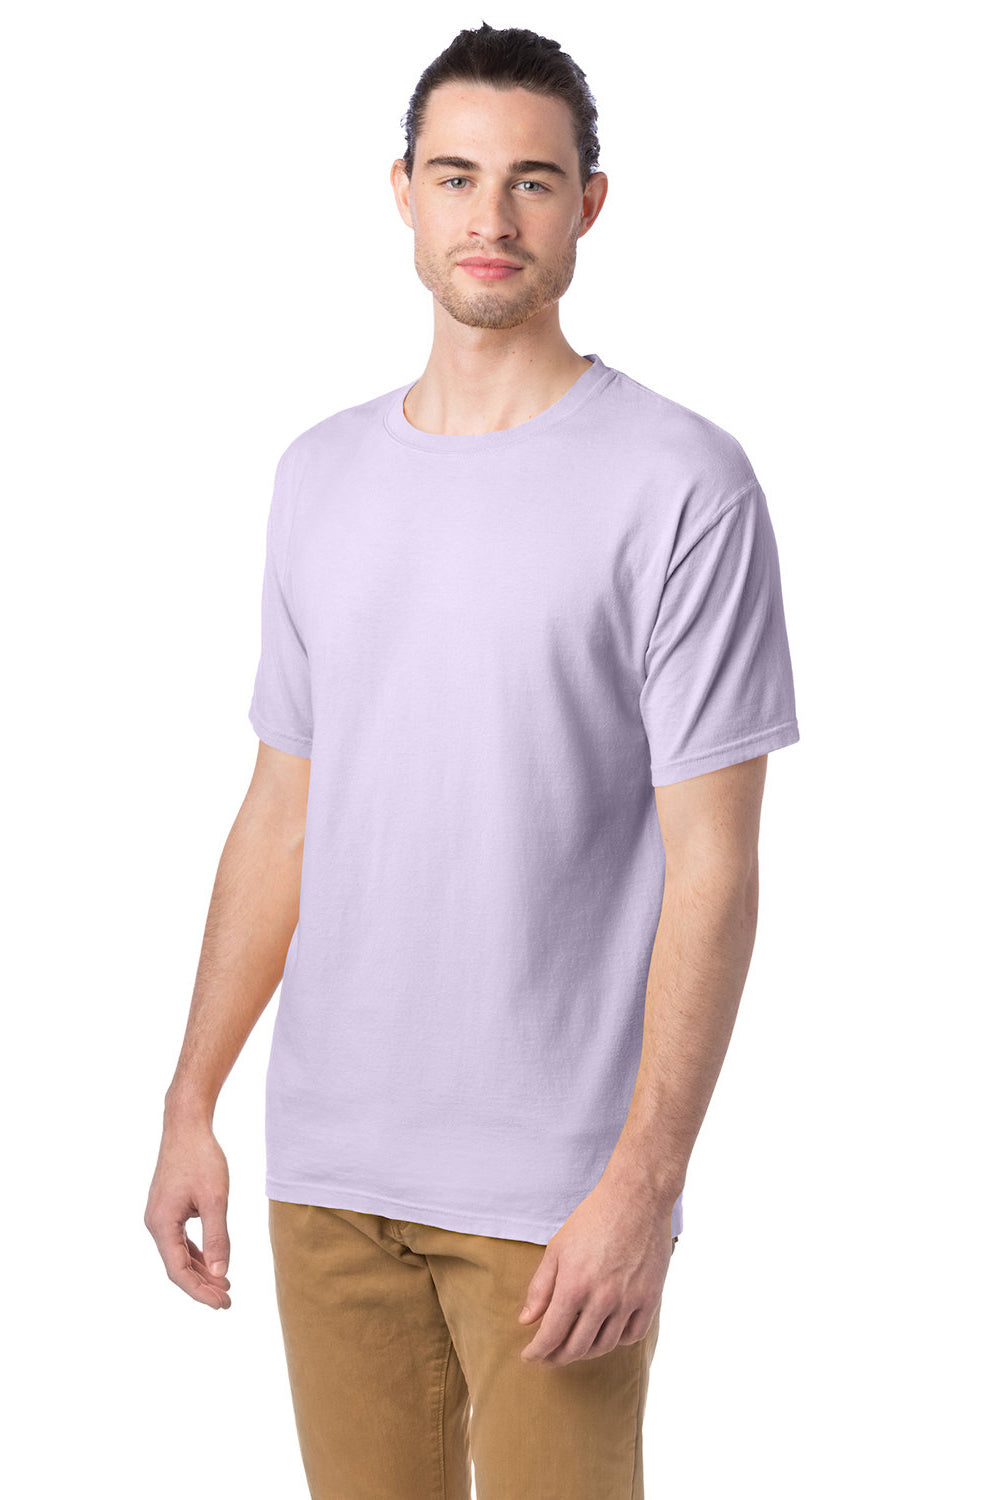 ComfortWash by Hanes GDH100 Mens Short Sleeve Crewneck T-Shirt Future Lavender Purple 3Q